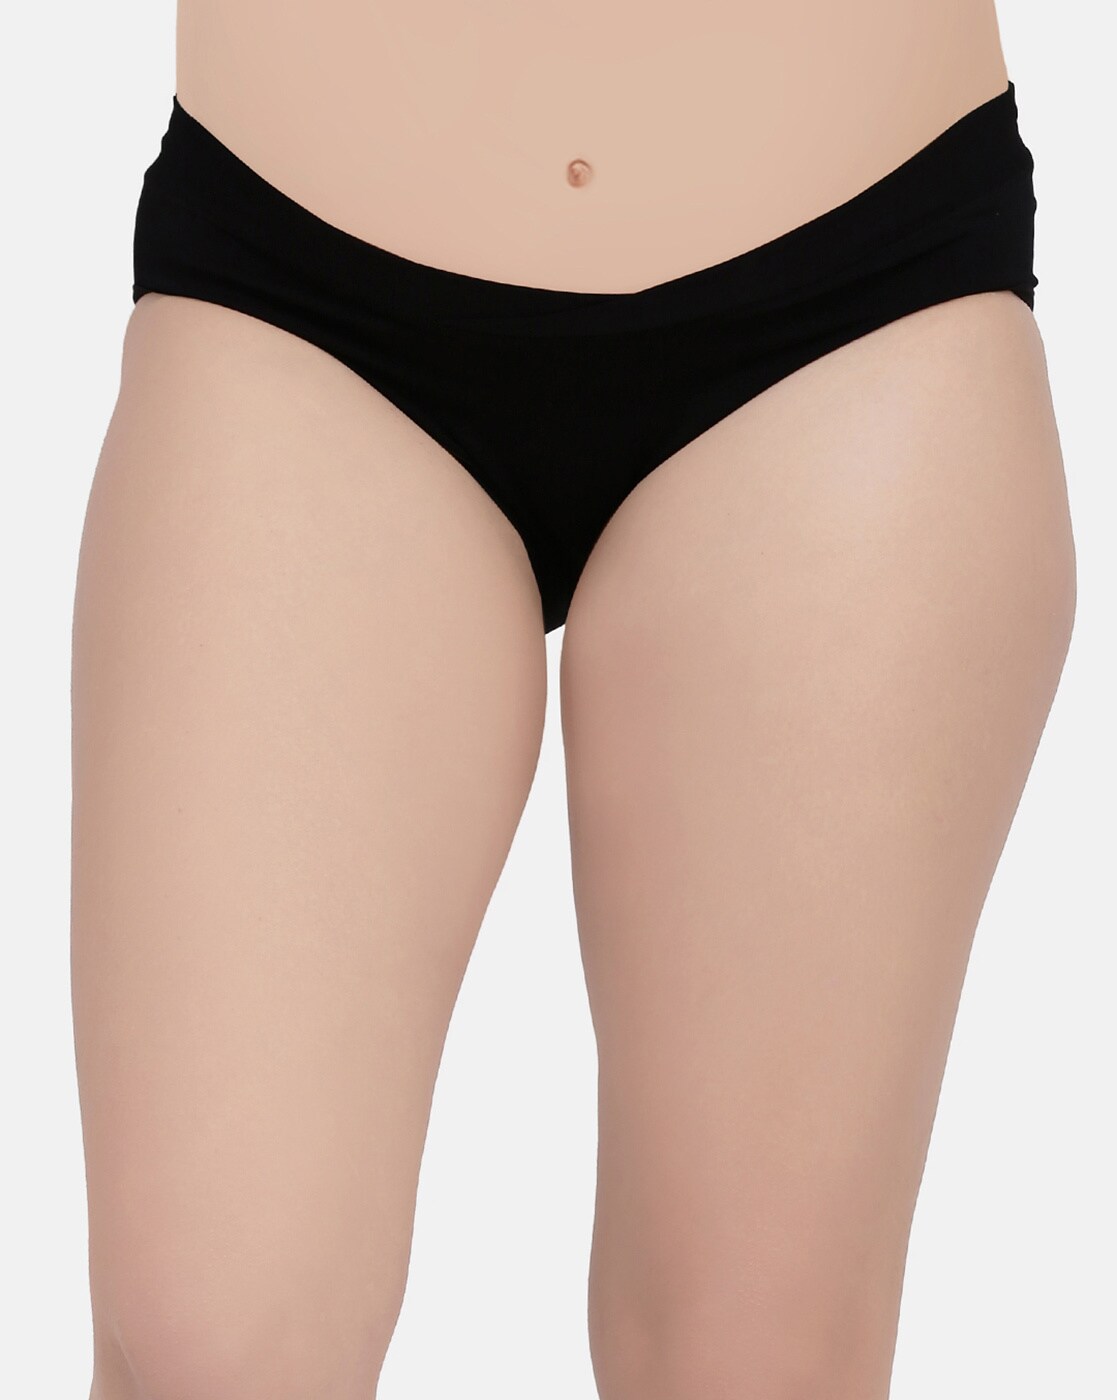 Buy Black Panties for Women by Mamma Presto Online